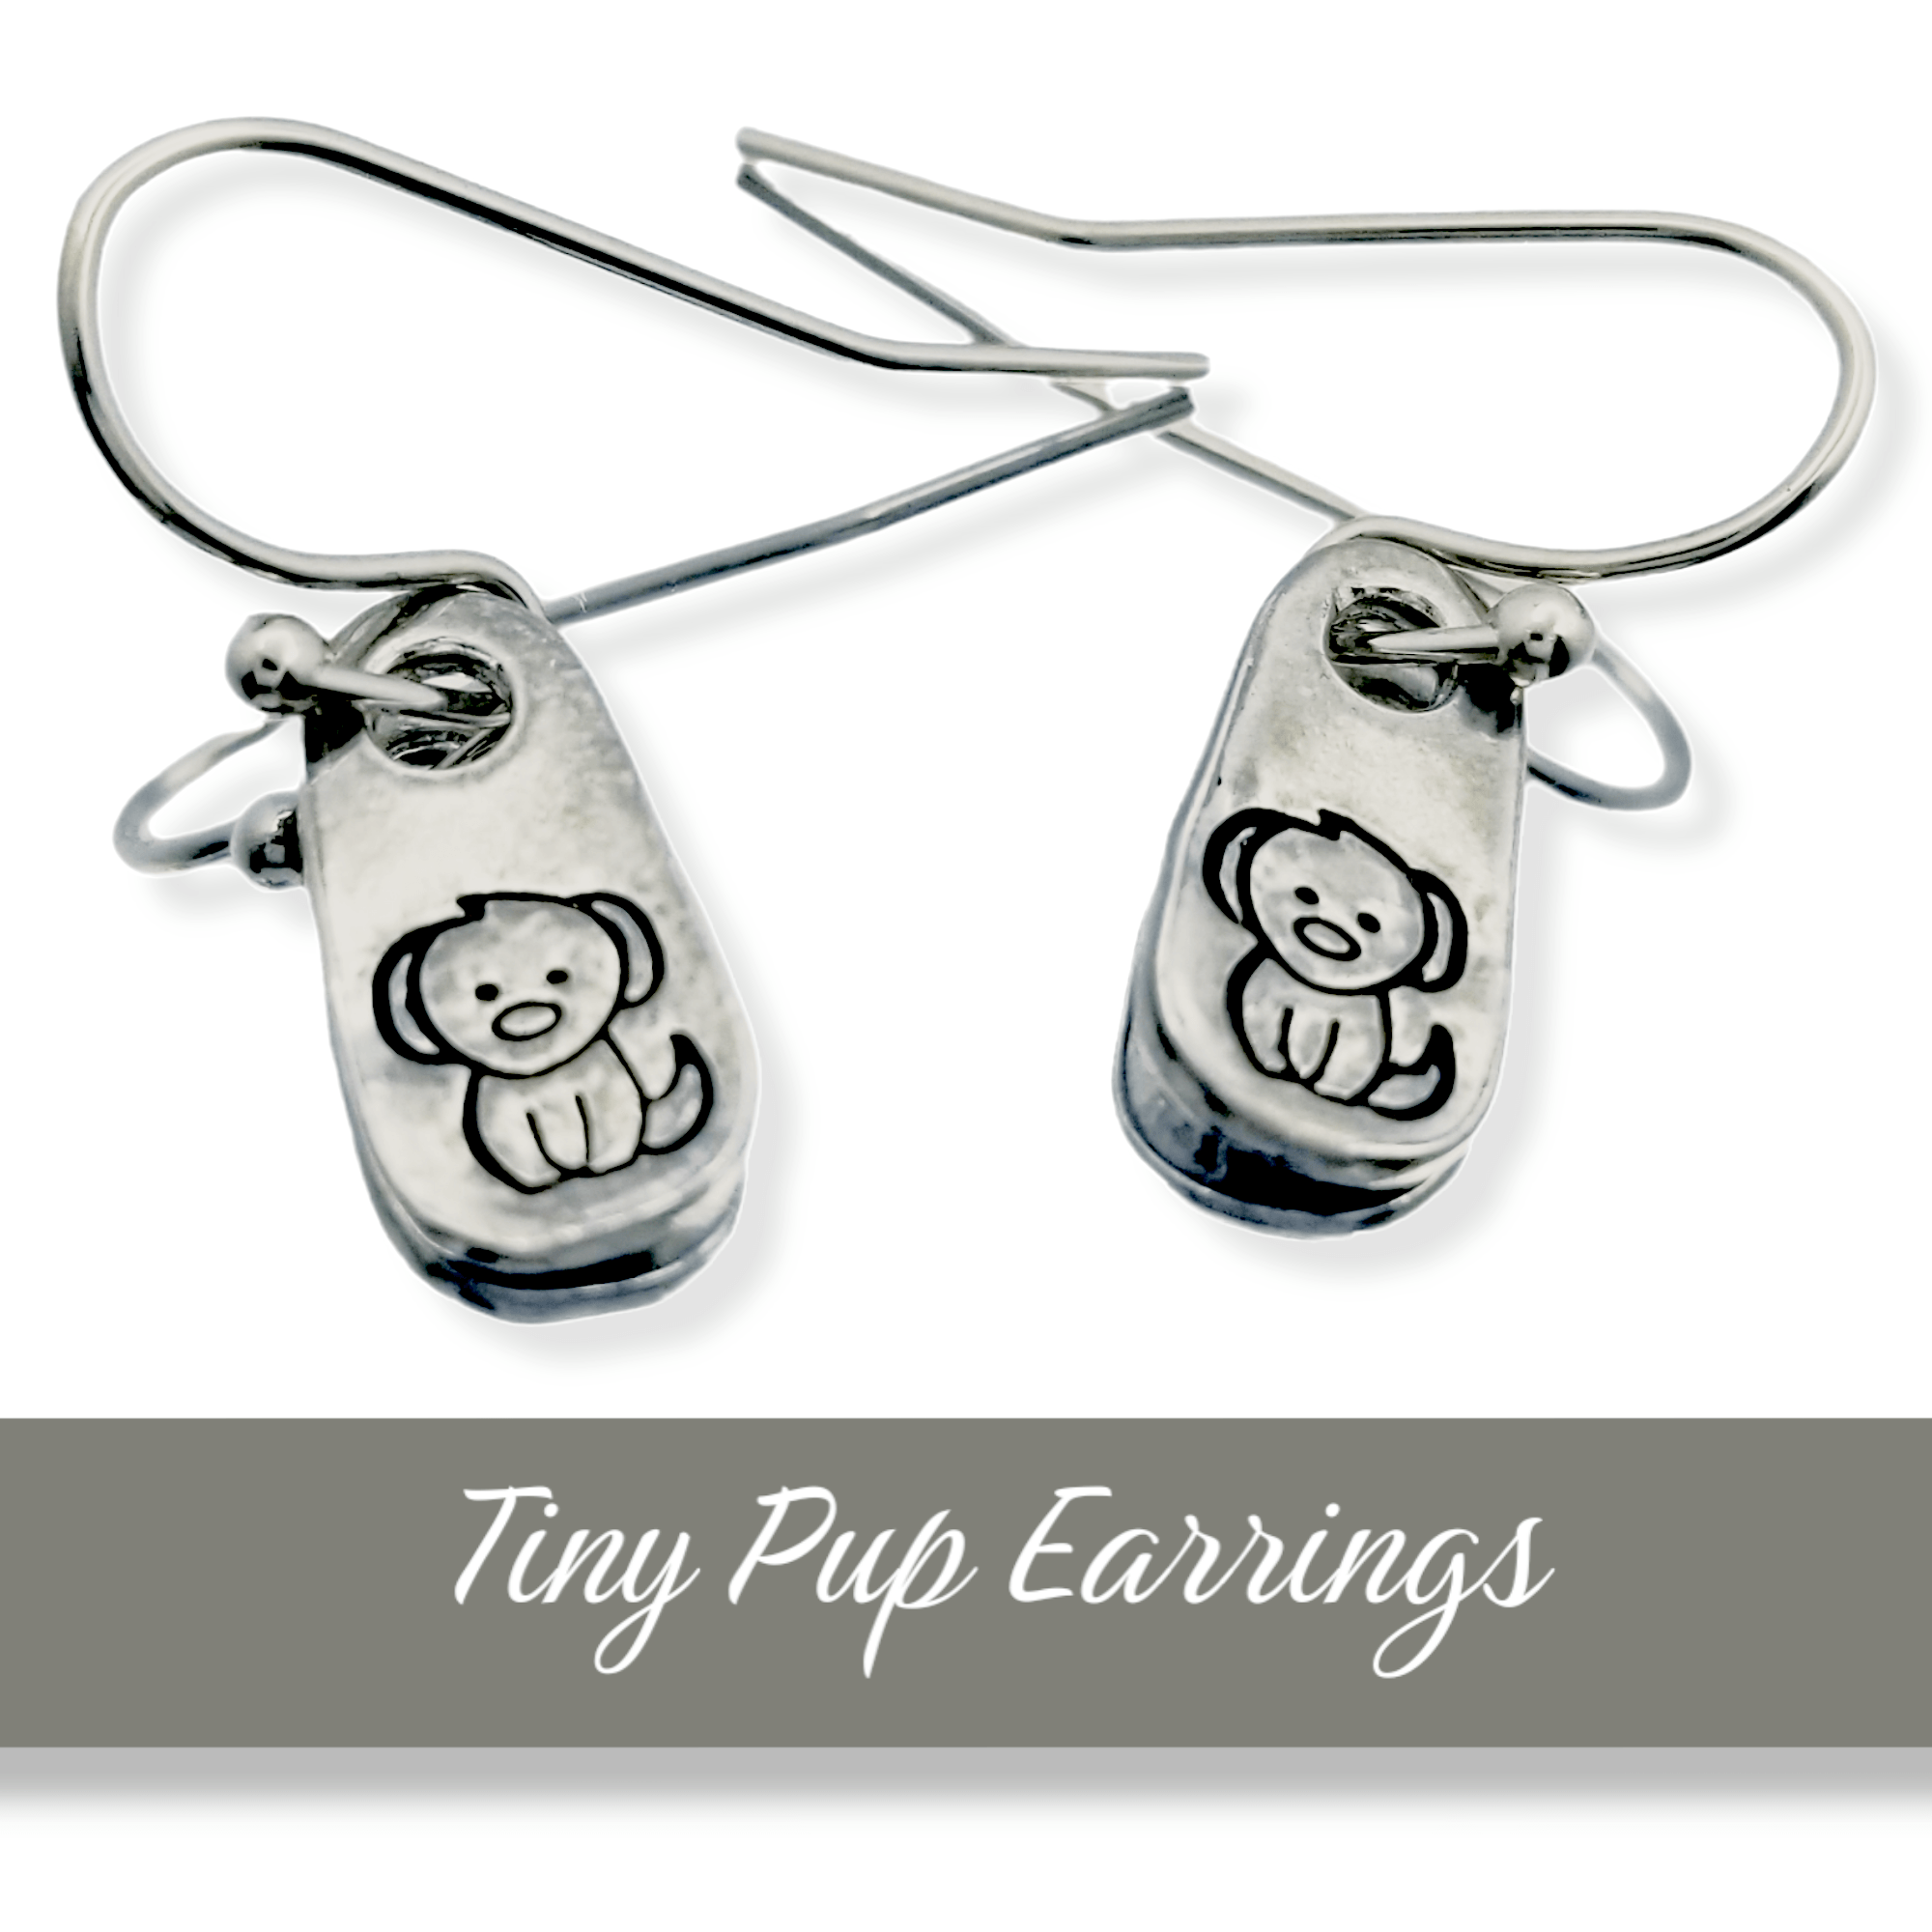 Tiny Dog Earrings, Hypoallergenic Jewelry, Dog Mom Earrings, Puppy Earrings, Rescue Dog Jewelry, Cute earrings, Cute Puppy, Trending jewelry